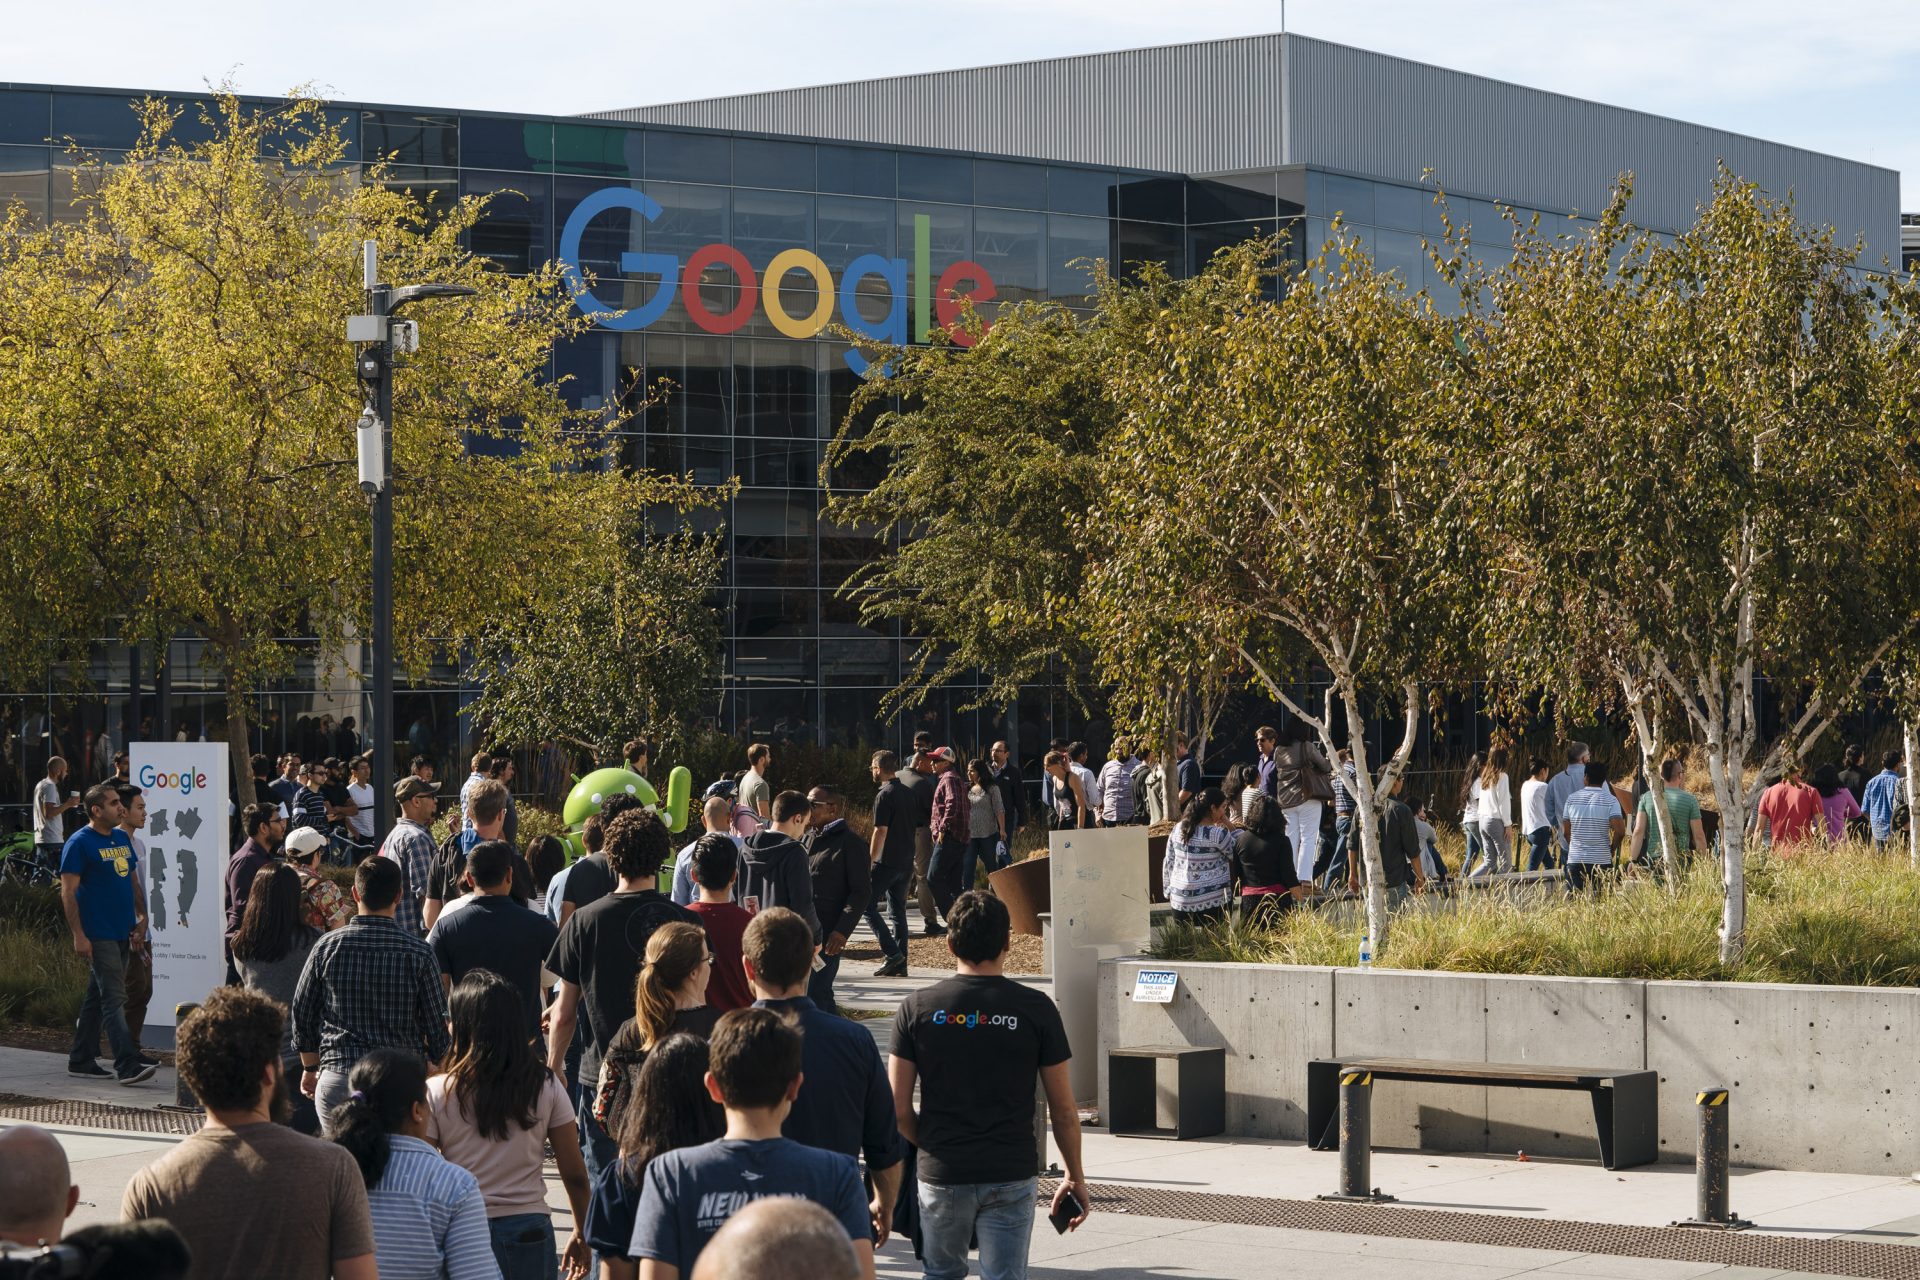 NLRB expands its Google criticism for alleged retaliatory dismissals